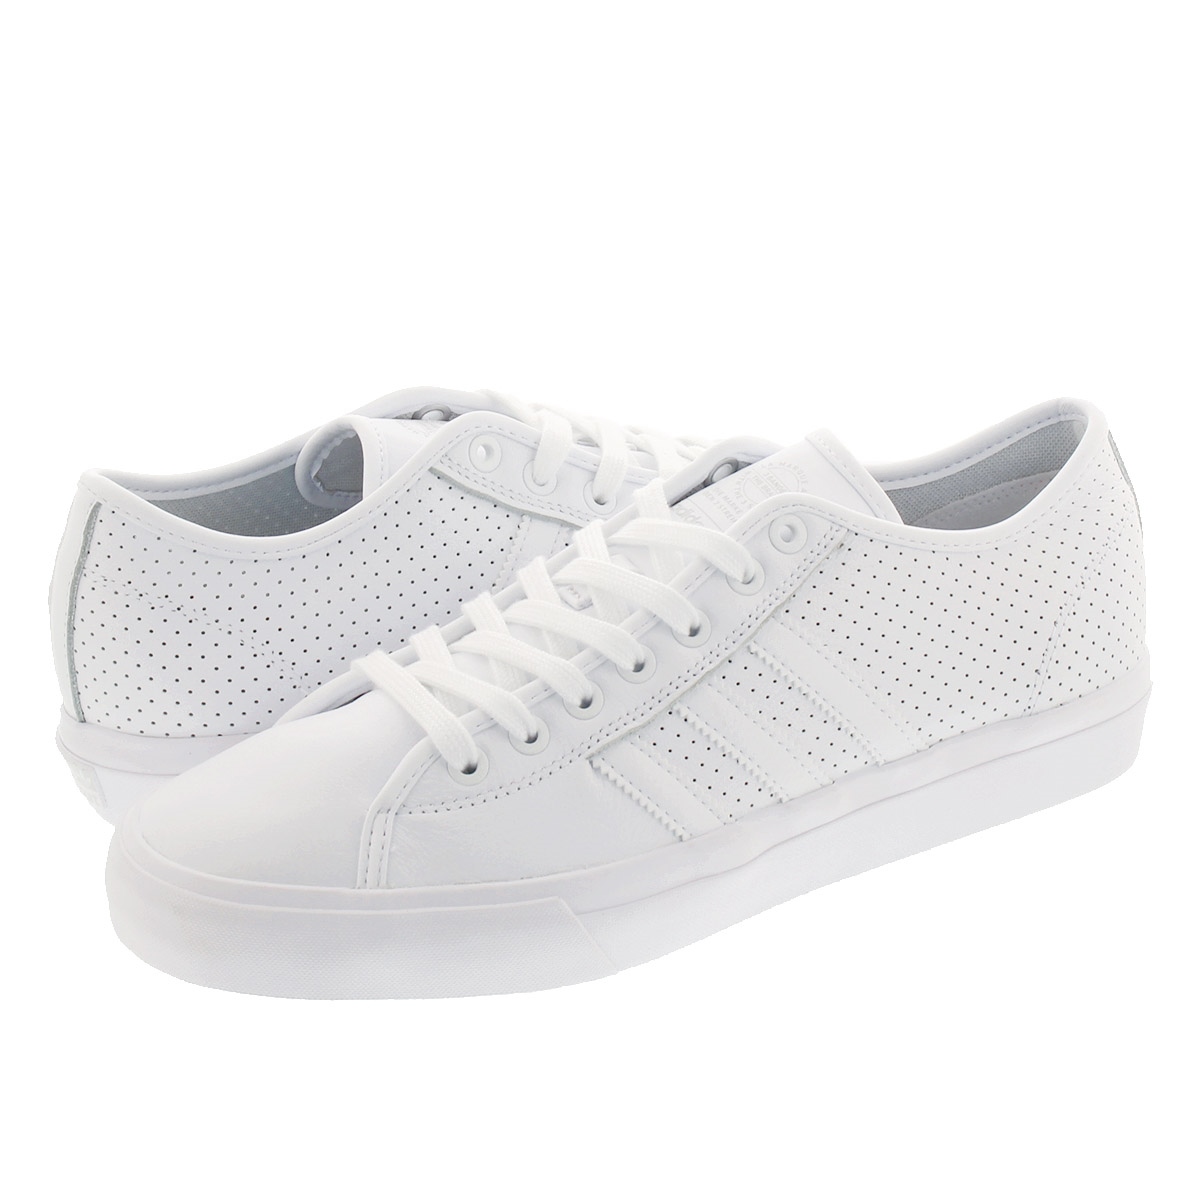 adidas matchcourt rx white \u0026 black shoes